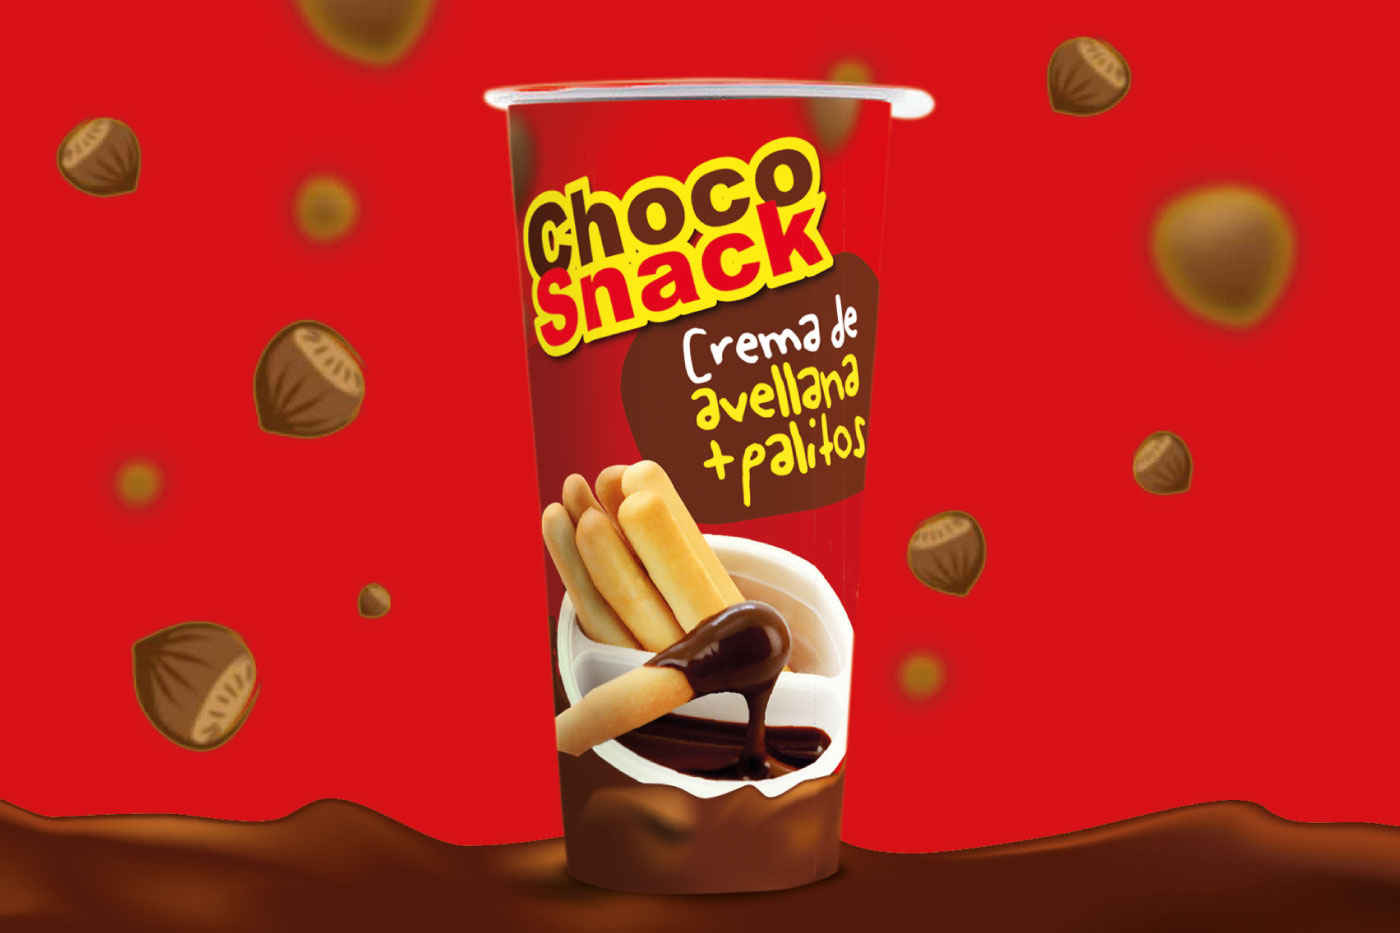 Choco snak avellana packaging etiqueta envase